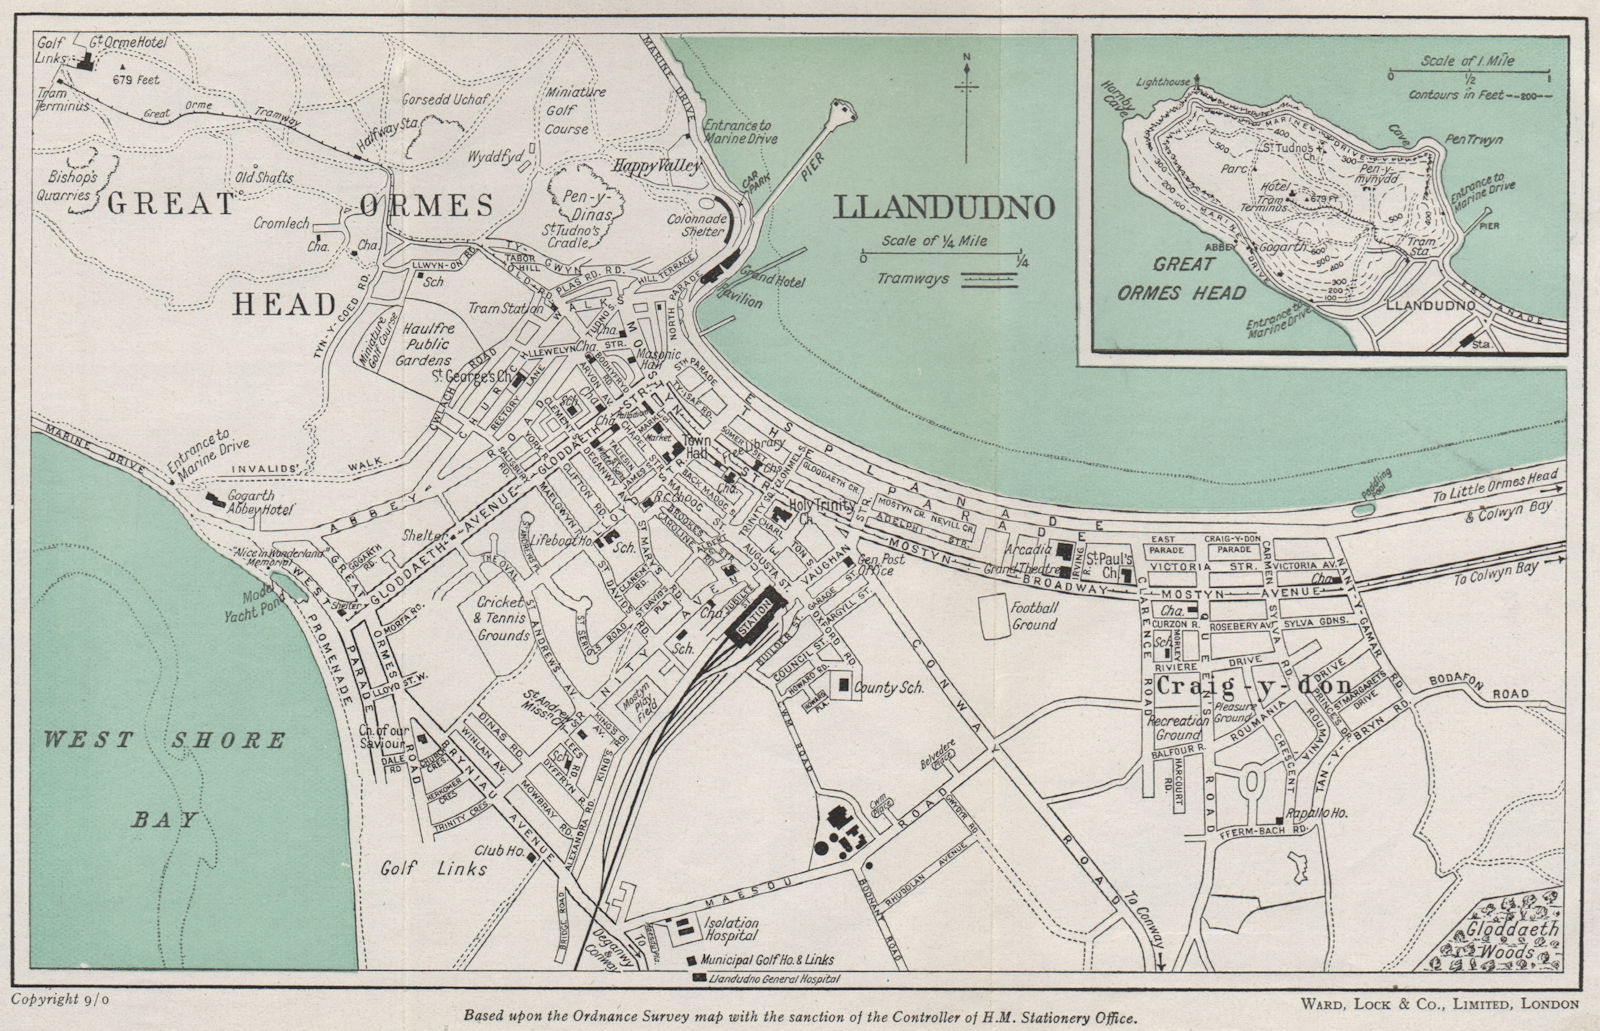 Associate Product LLANDUDNO vintage town/city plan. Great Orme's Head. Wales. WARD LOCK 1950 map